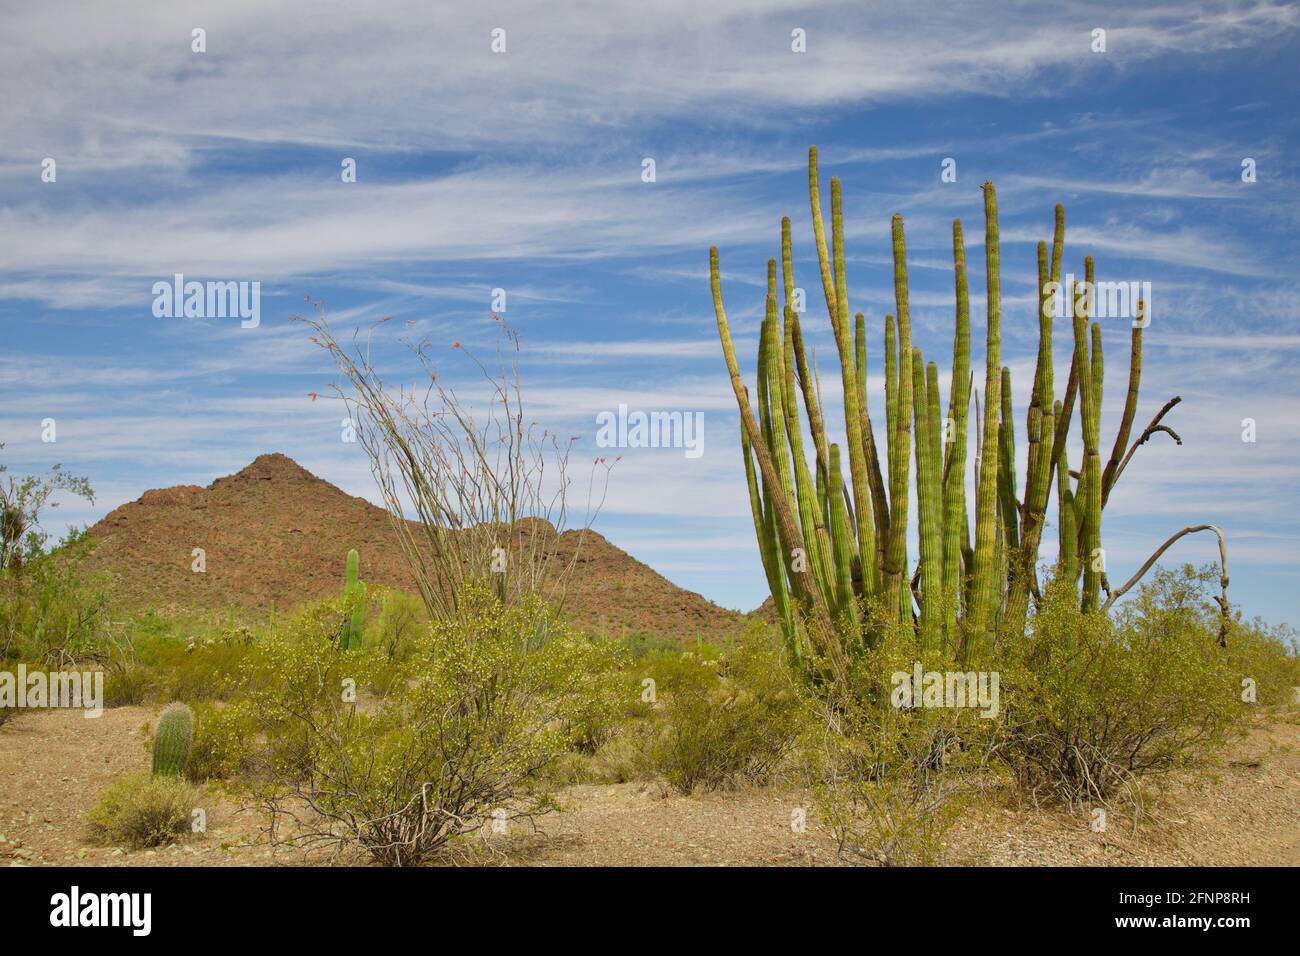 Organ Pipe Cactus in Organ Pipe Cactus National Monument, Sonoran Desert, Arizona, near the Mexican border wall Stock Photo